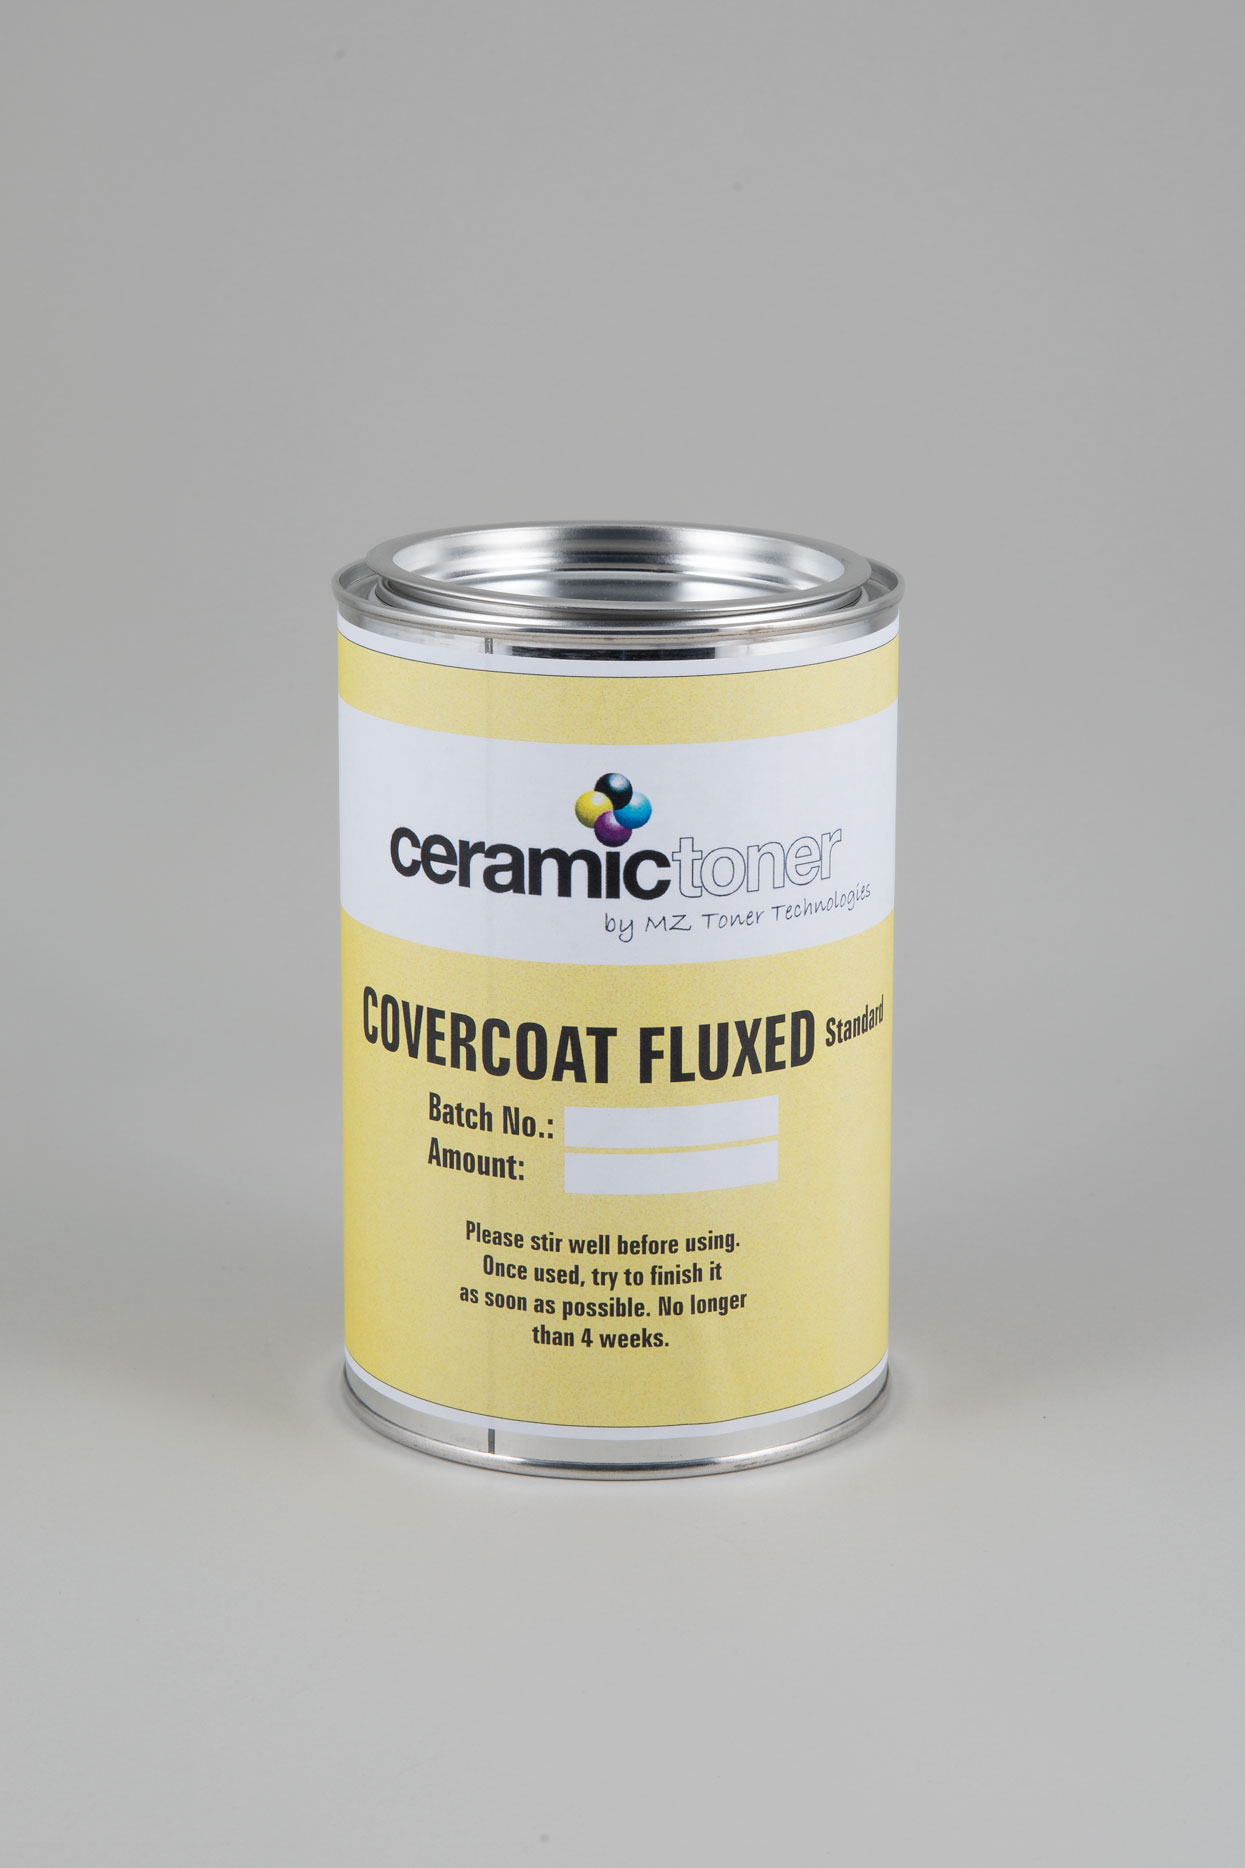 Ceramictoner 标准釉面漆 Covercoat Fluxed Standard 为罐装，适用于瓷器和陶瓷。涂层呈淡黄色